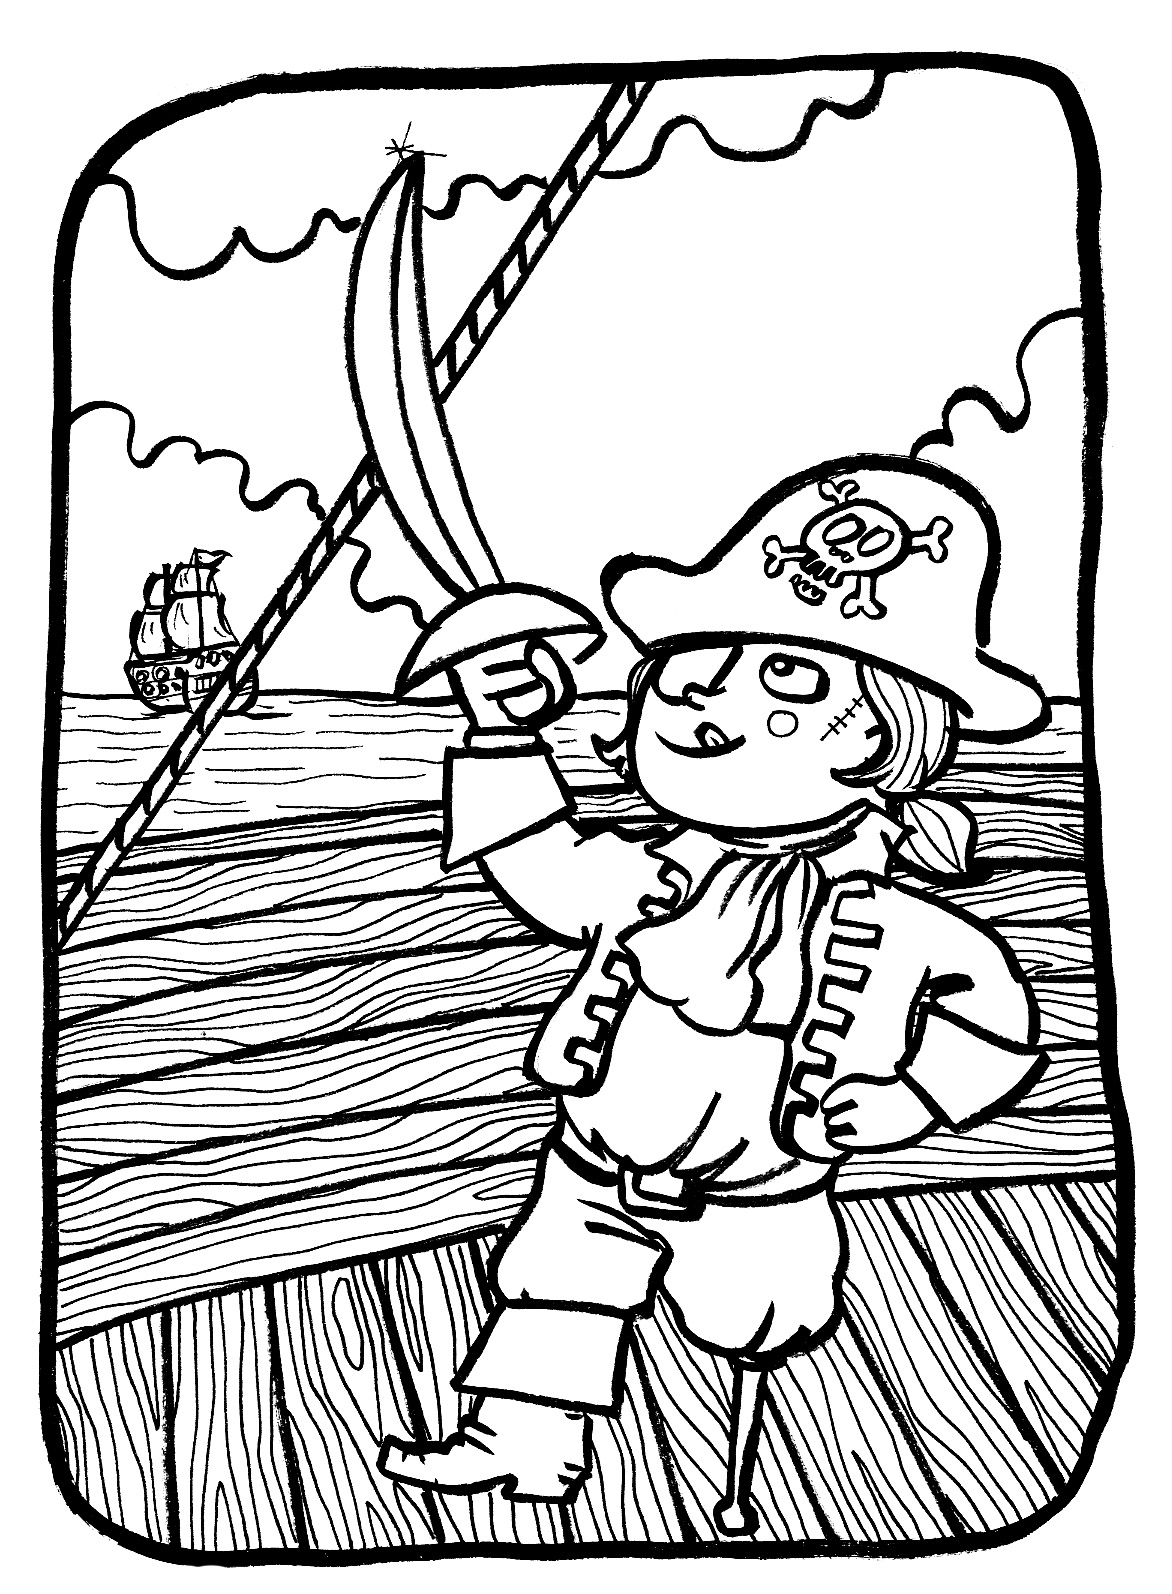 Colorear a un simpático pirata marino